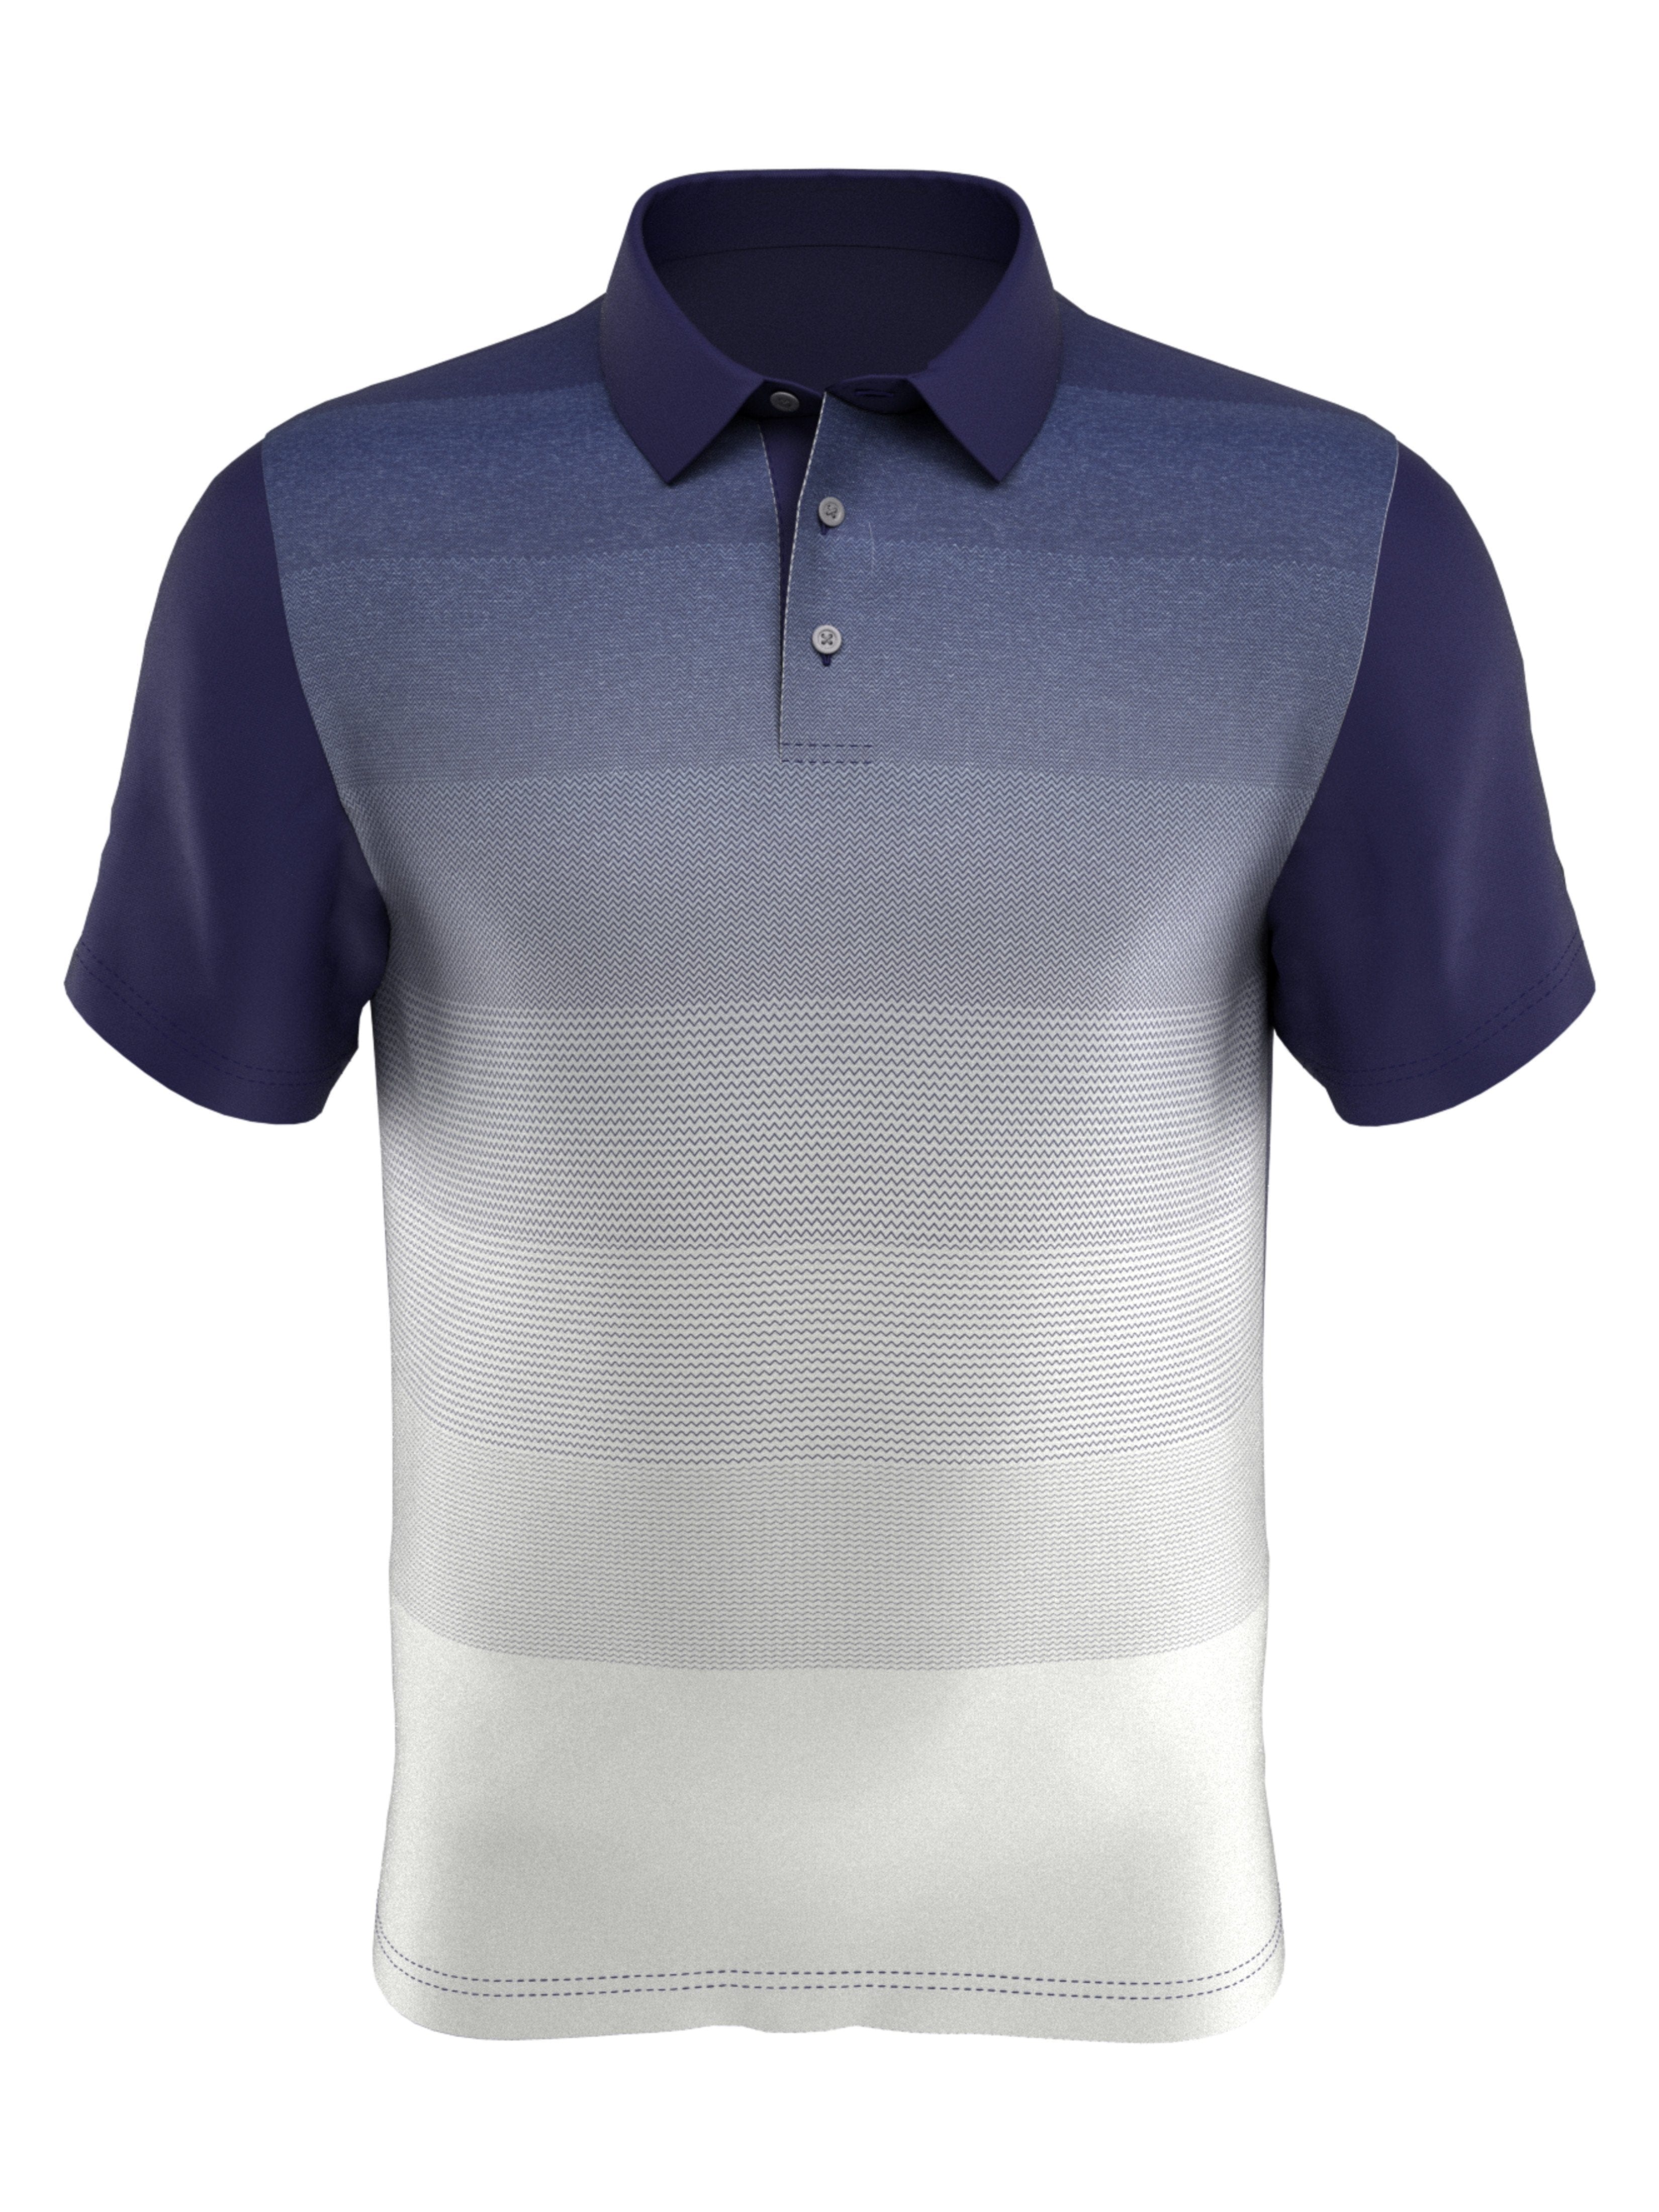 PGA TOUR Apparel Boys Front Ombre Polo Shirt, Size Large, Blueprint, 100% Polyester | Golf Apparel Shop